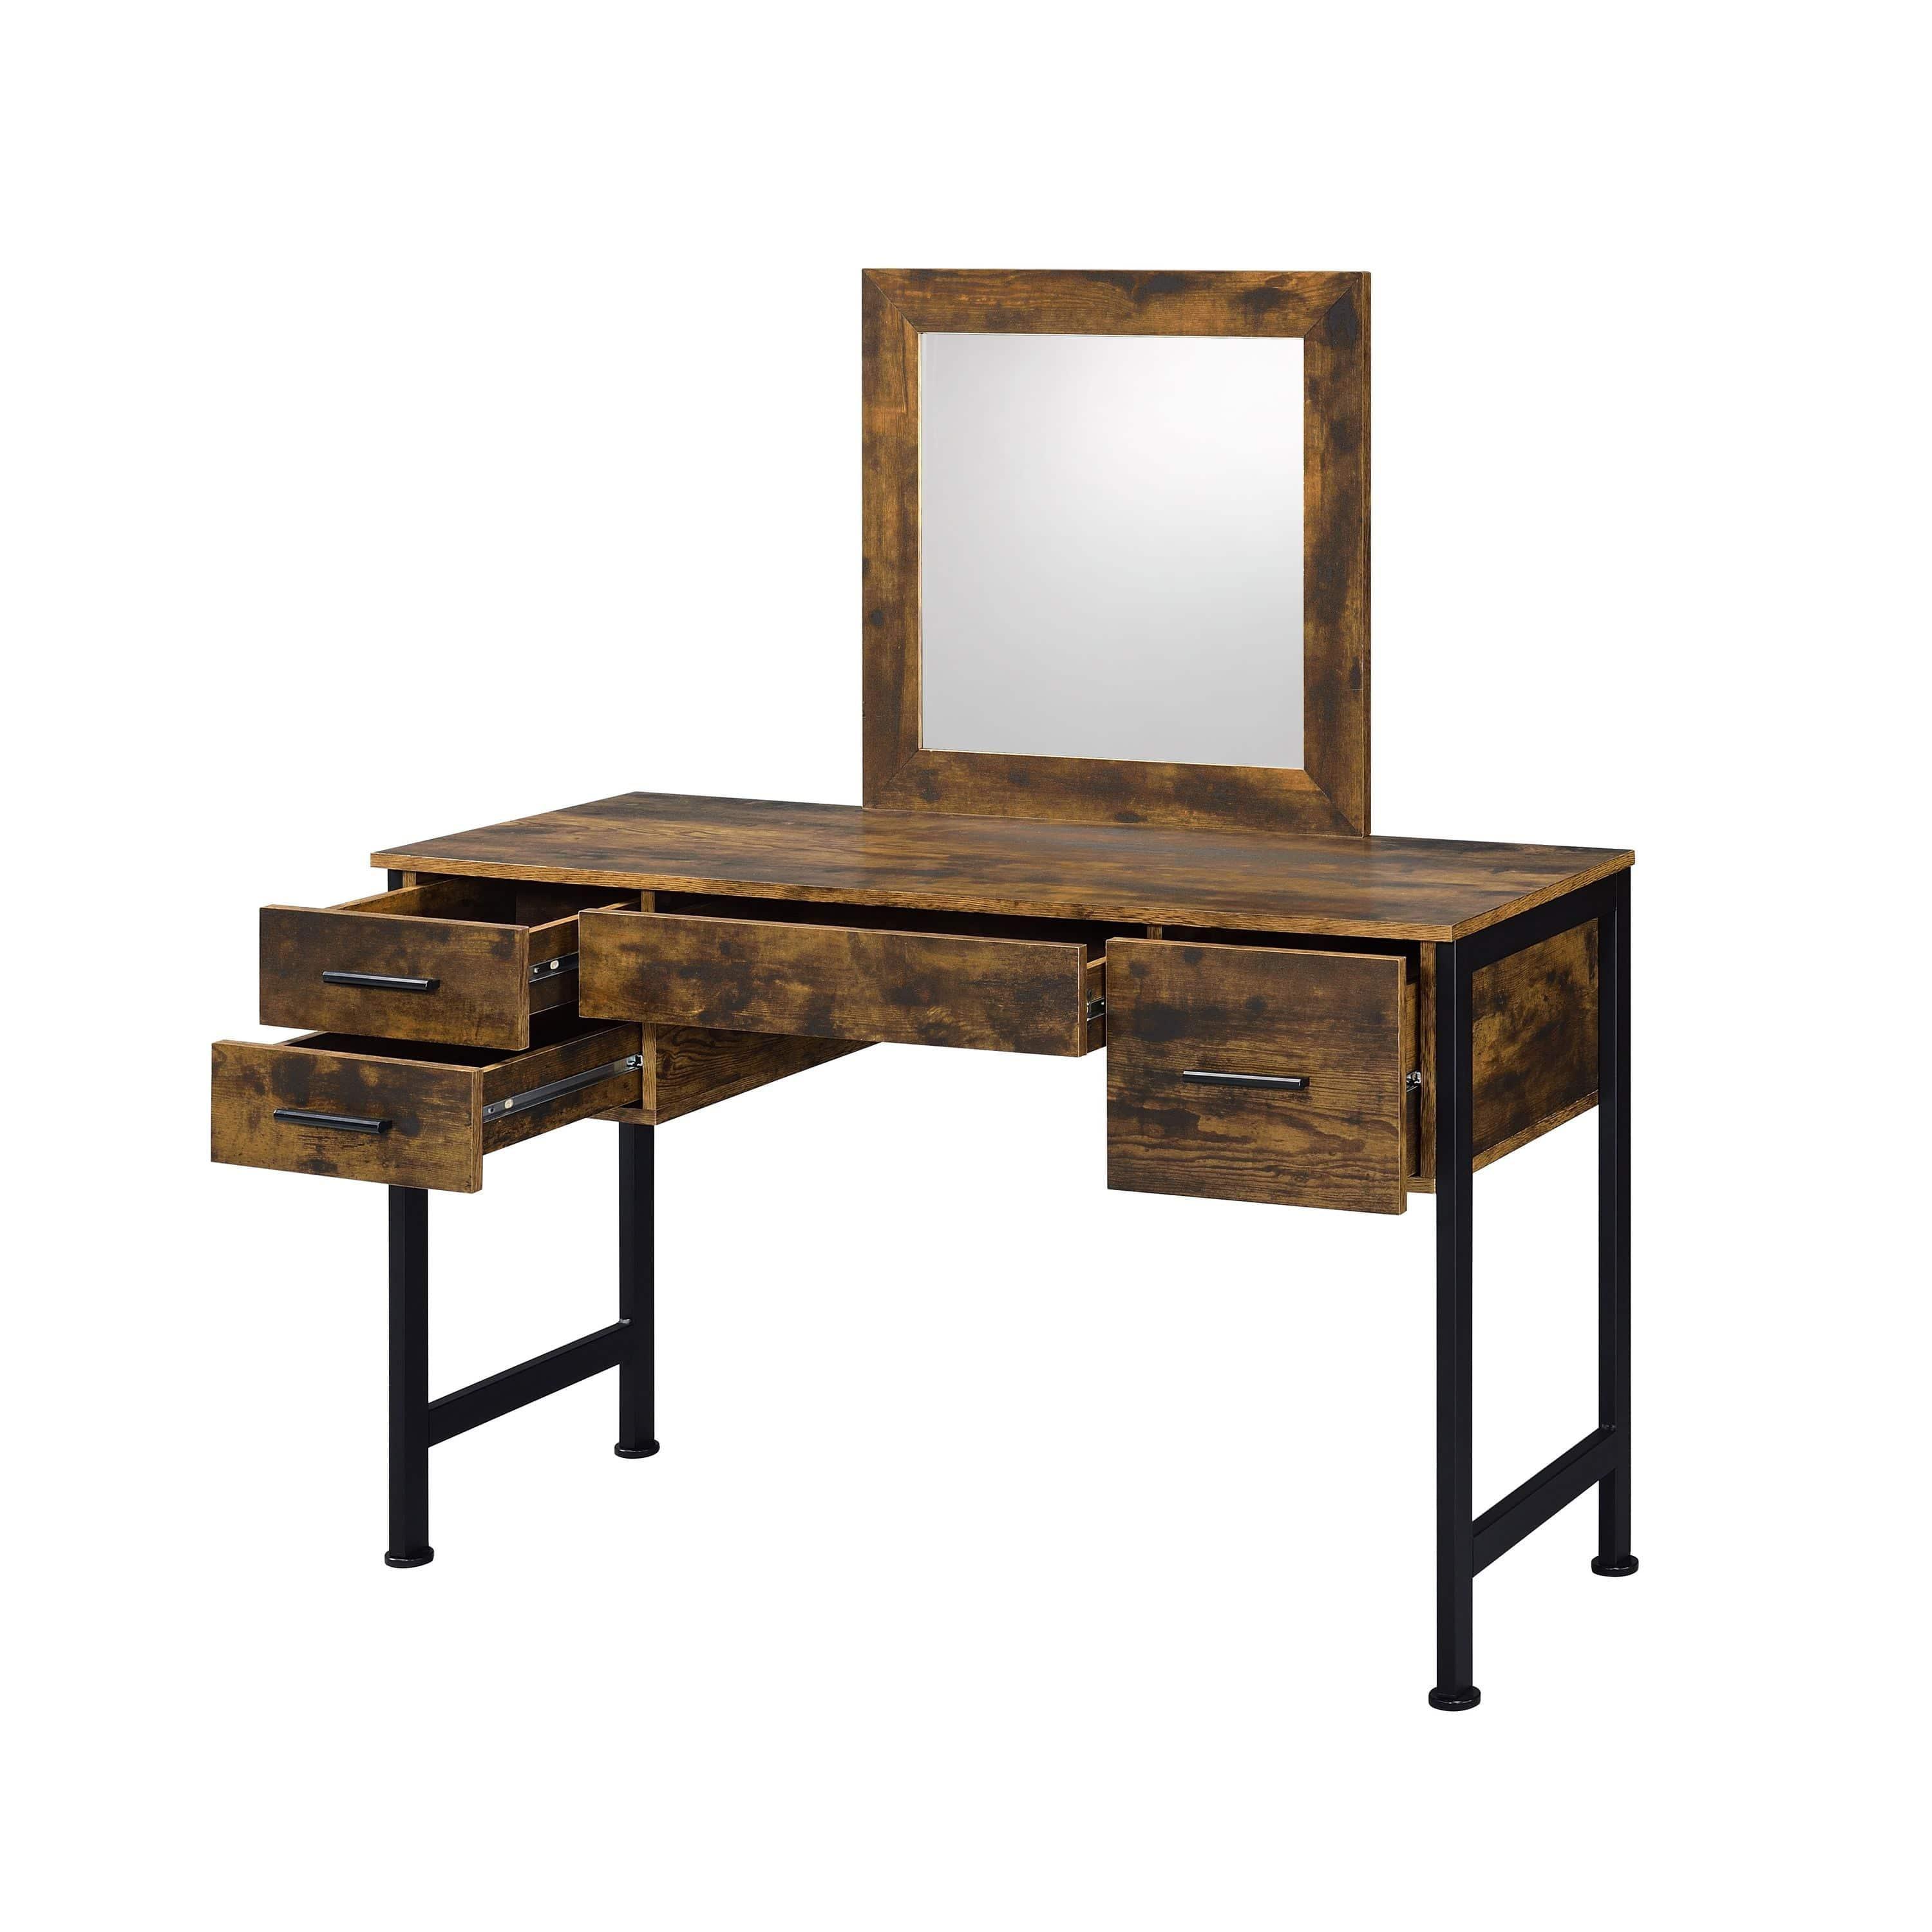 Shop ACME Juvanth Vanity Desk & Mirror in Rustic Oak & Black Finish 24267 Mademoiselle Home Decor